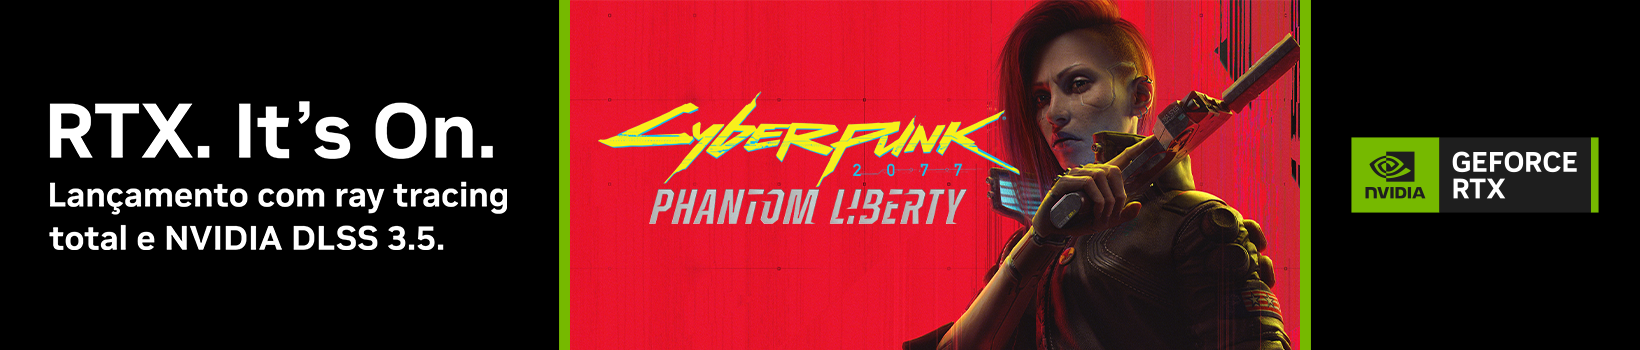 Faz agora o upgrade ao teu pc com as RTX serie 40 para jogar Cyberpunk 2077: Phantom Liberty